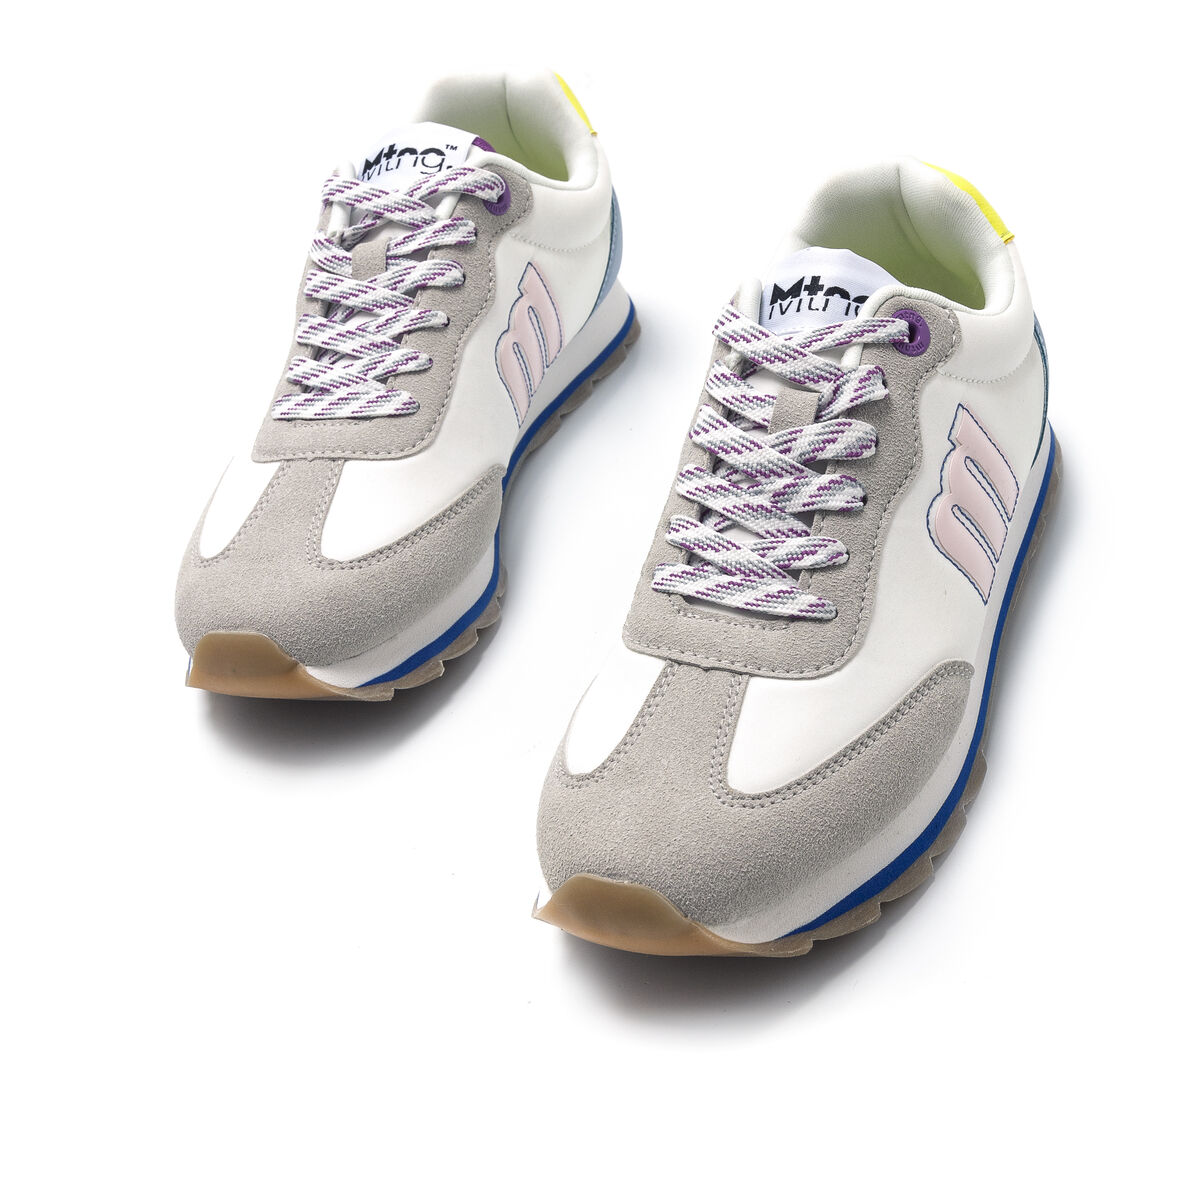 Sneakers de Mulher modelo JOGGO SAI de MTNG image number 2